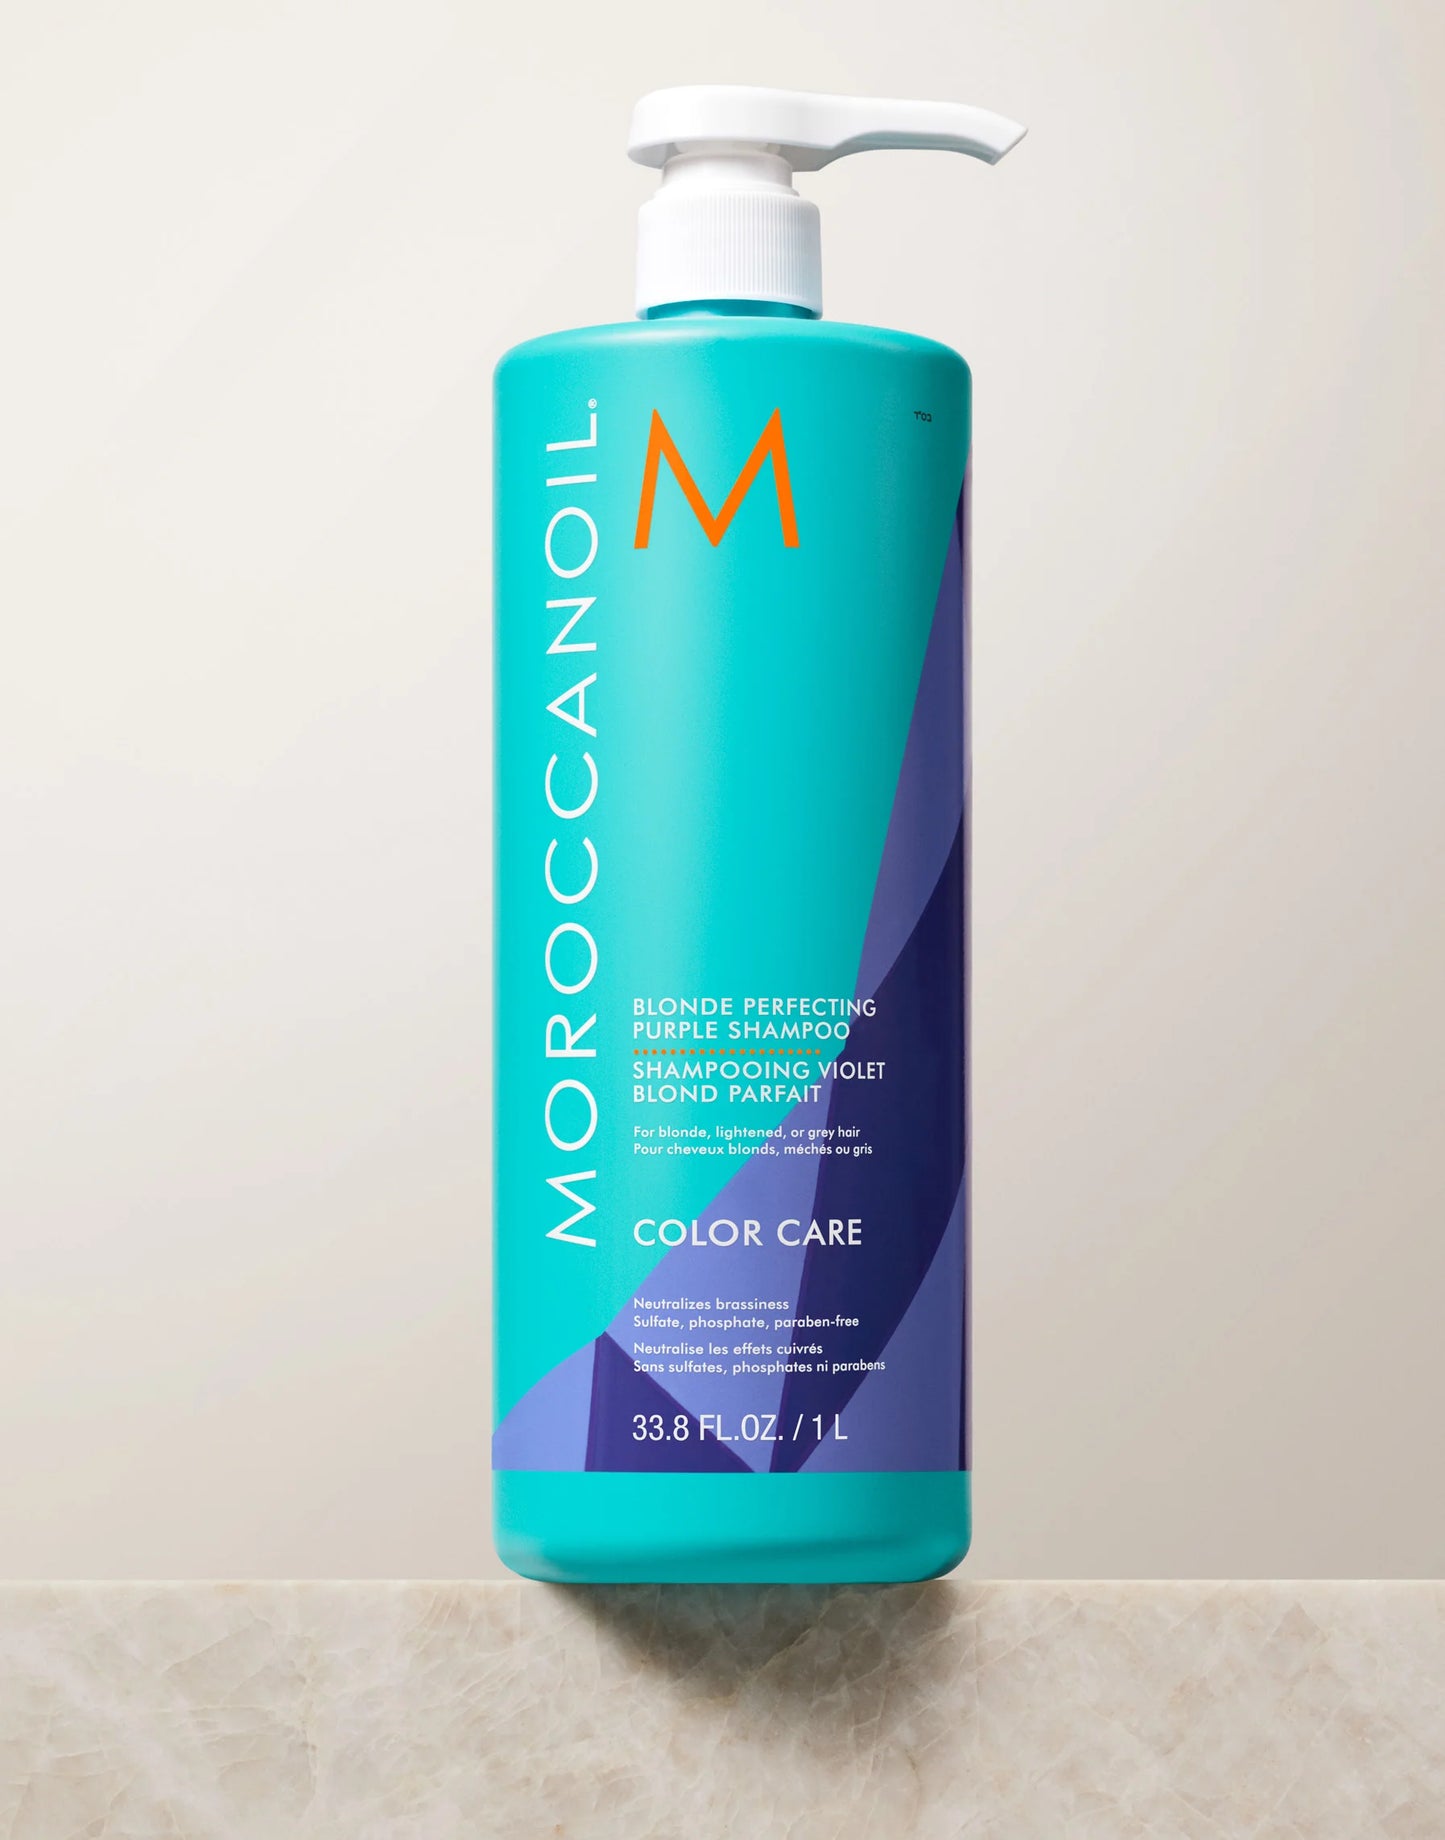 Moroccanoil. Blonde Perfecting Purple Shampoo Liter